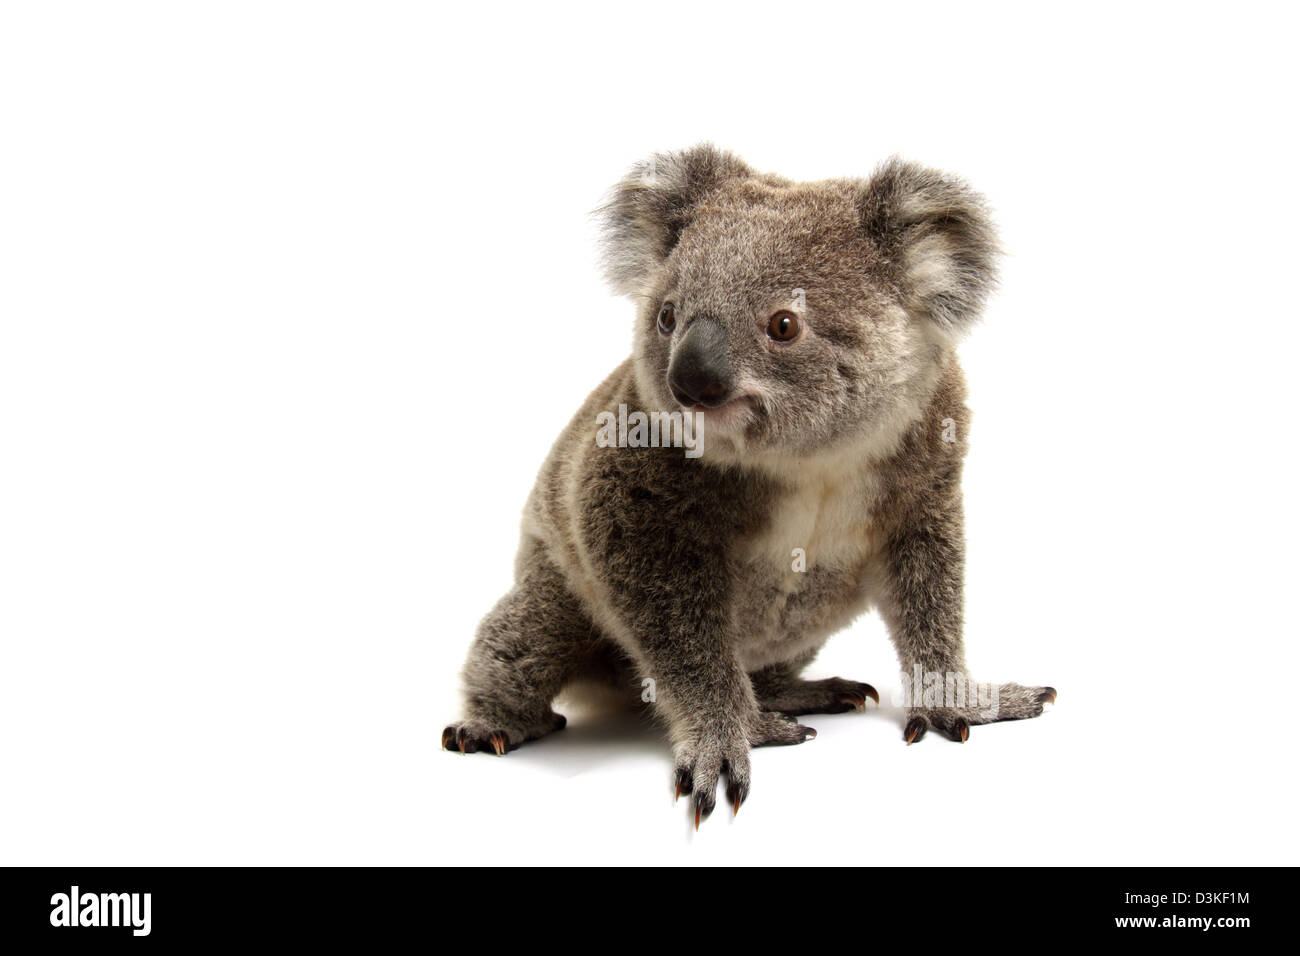 Koala in a studio Stock Photo